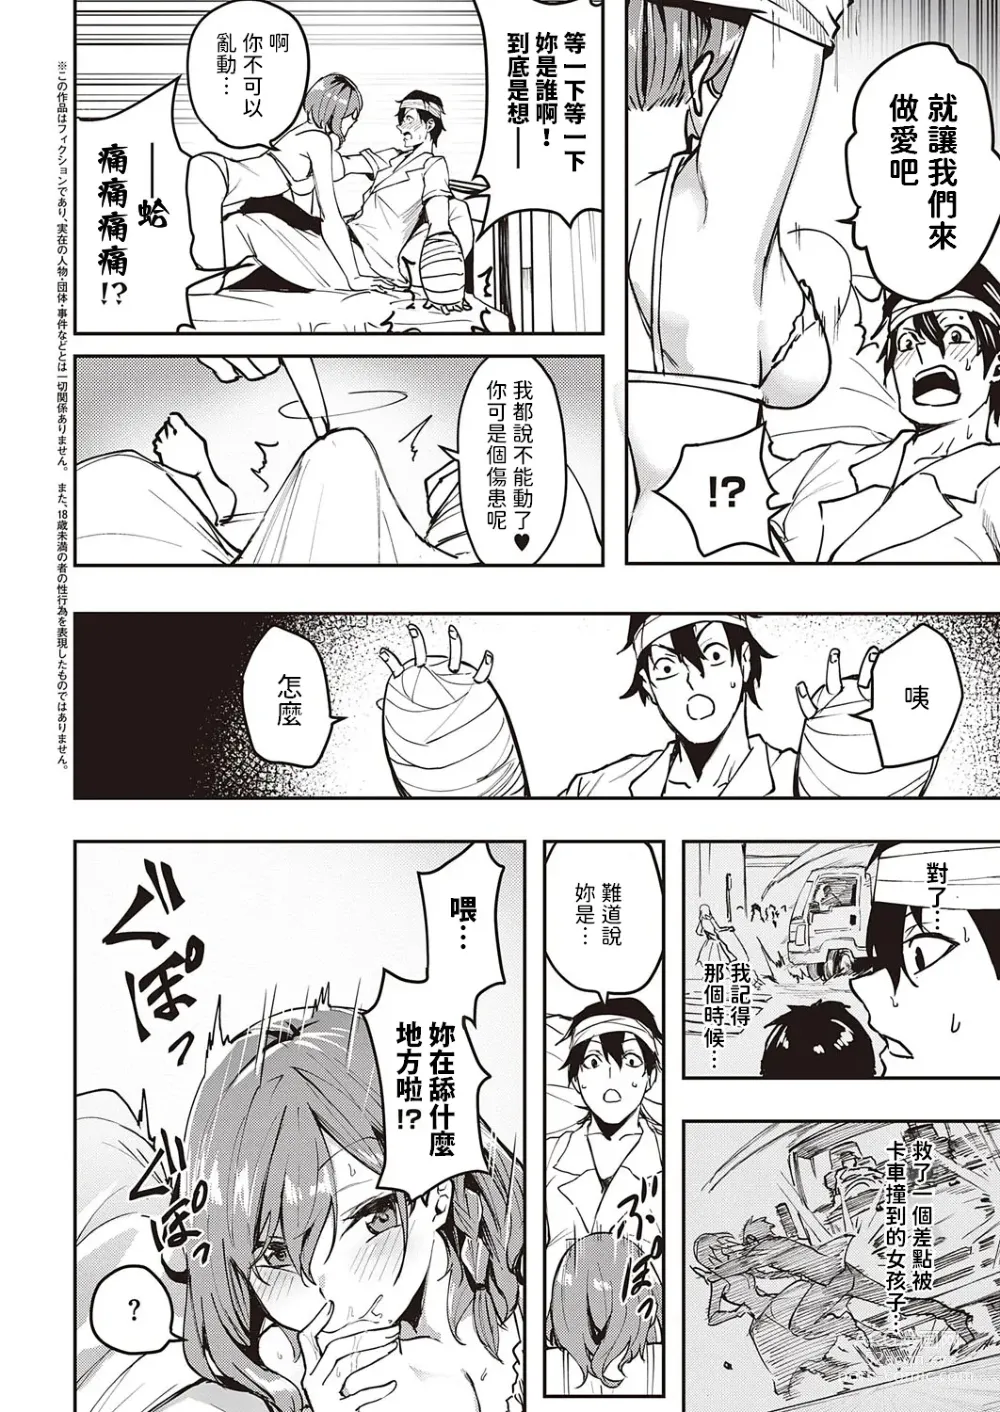 Page 2 of manga Hina no Ongaeshi